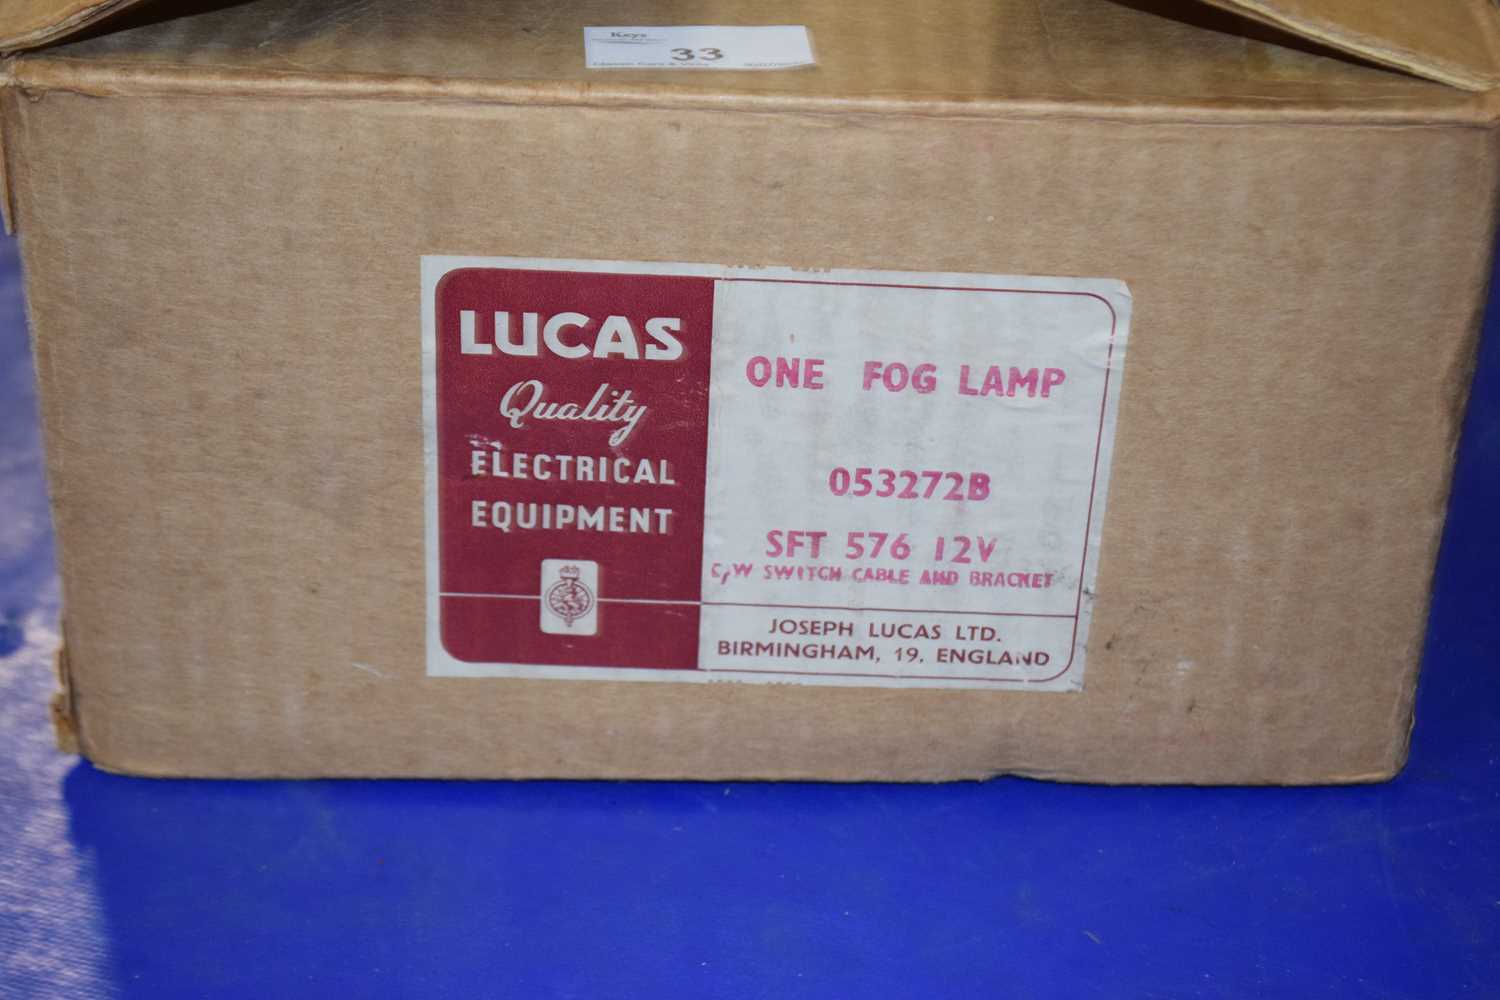 Lucas one fog lamp no 503272B - Image 5 of 5